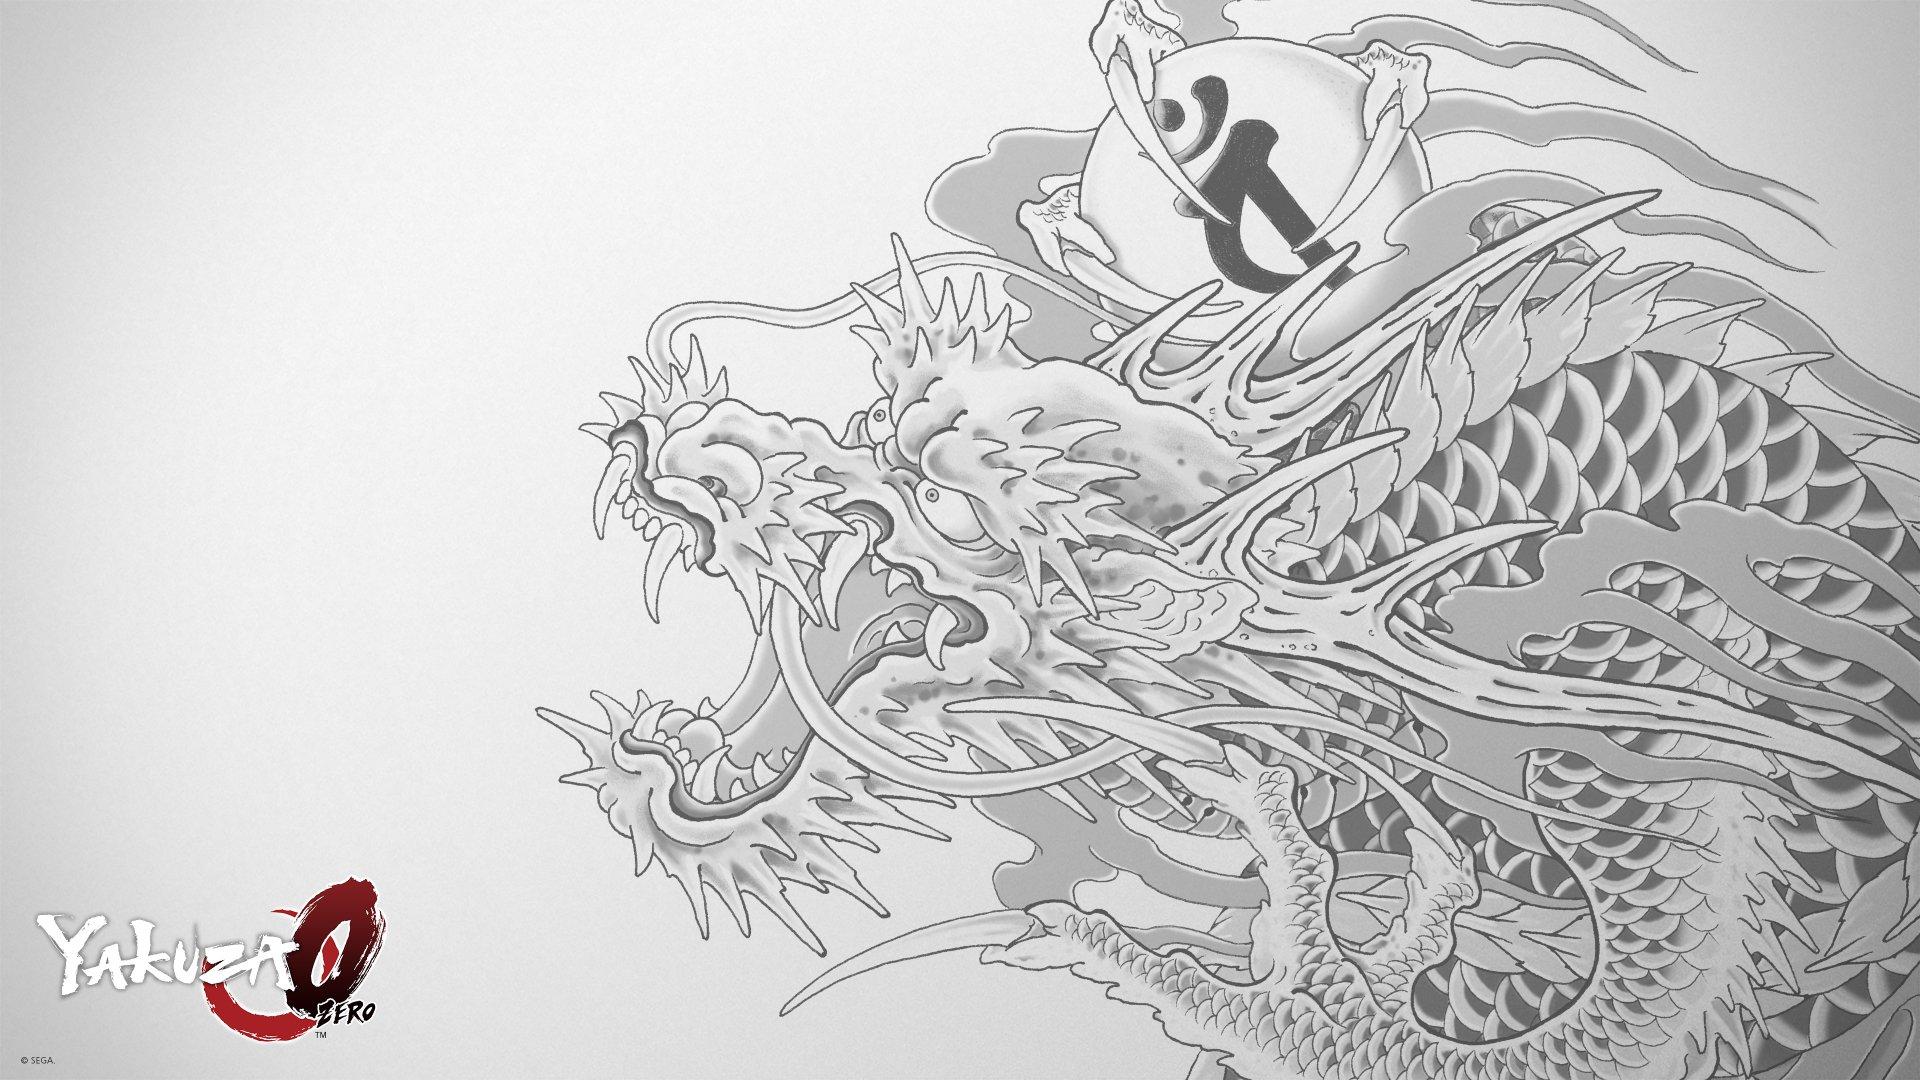 Yakuza tatoo. Wallpaper from Yakuza 0